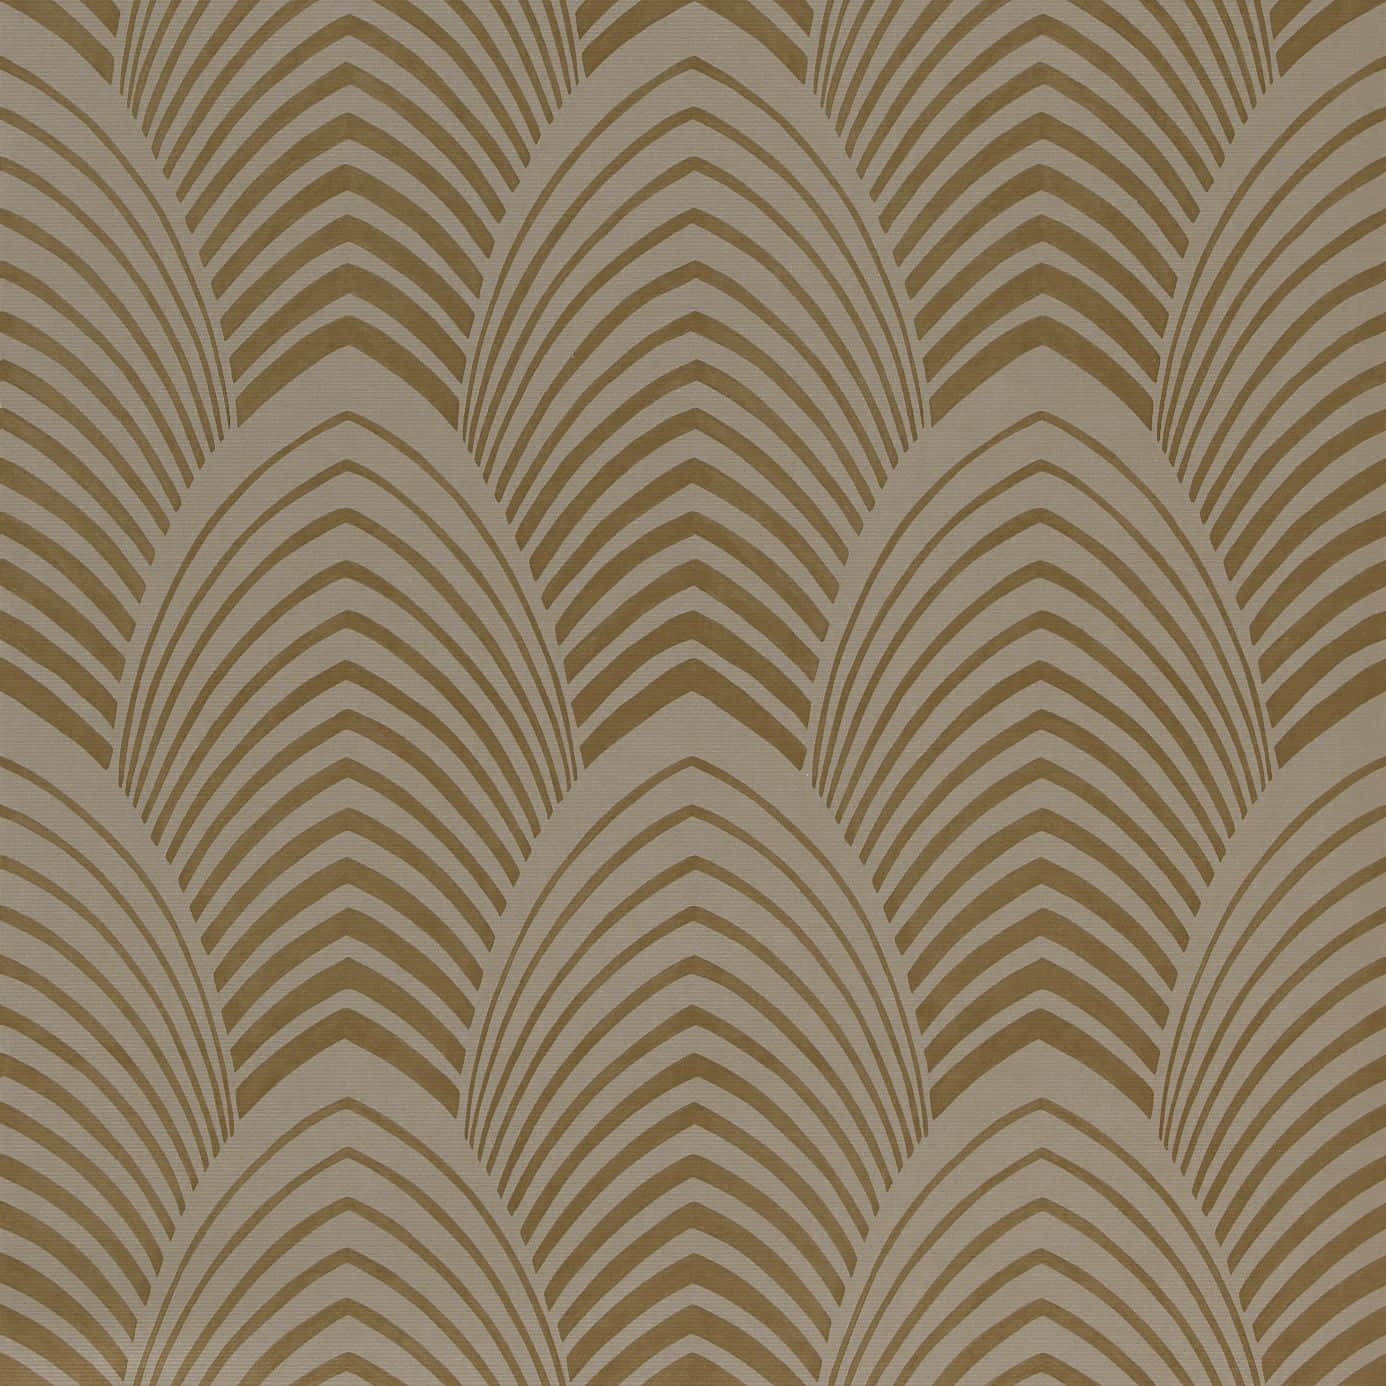 Sophisticated Art Deco Computer Wallpaper